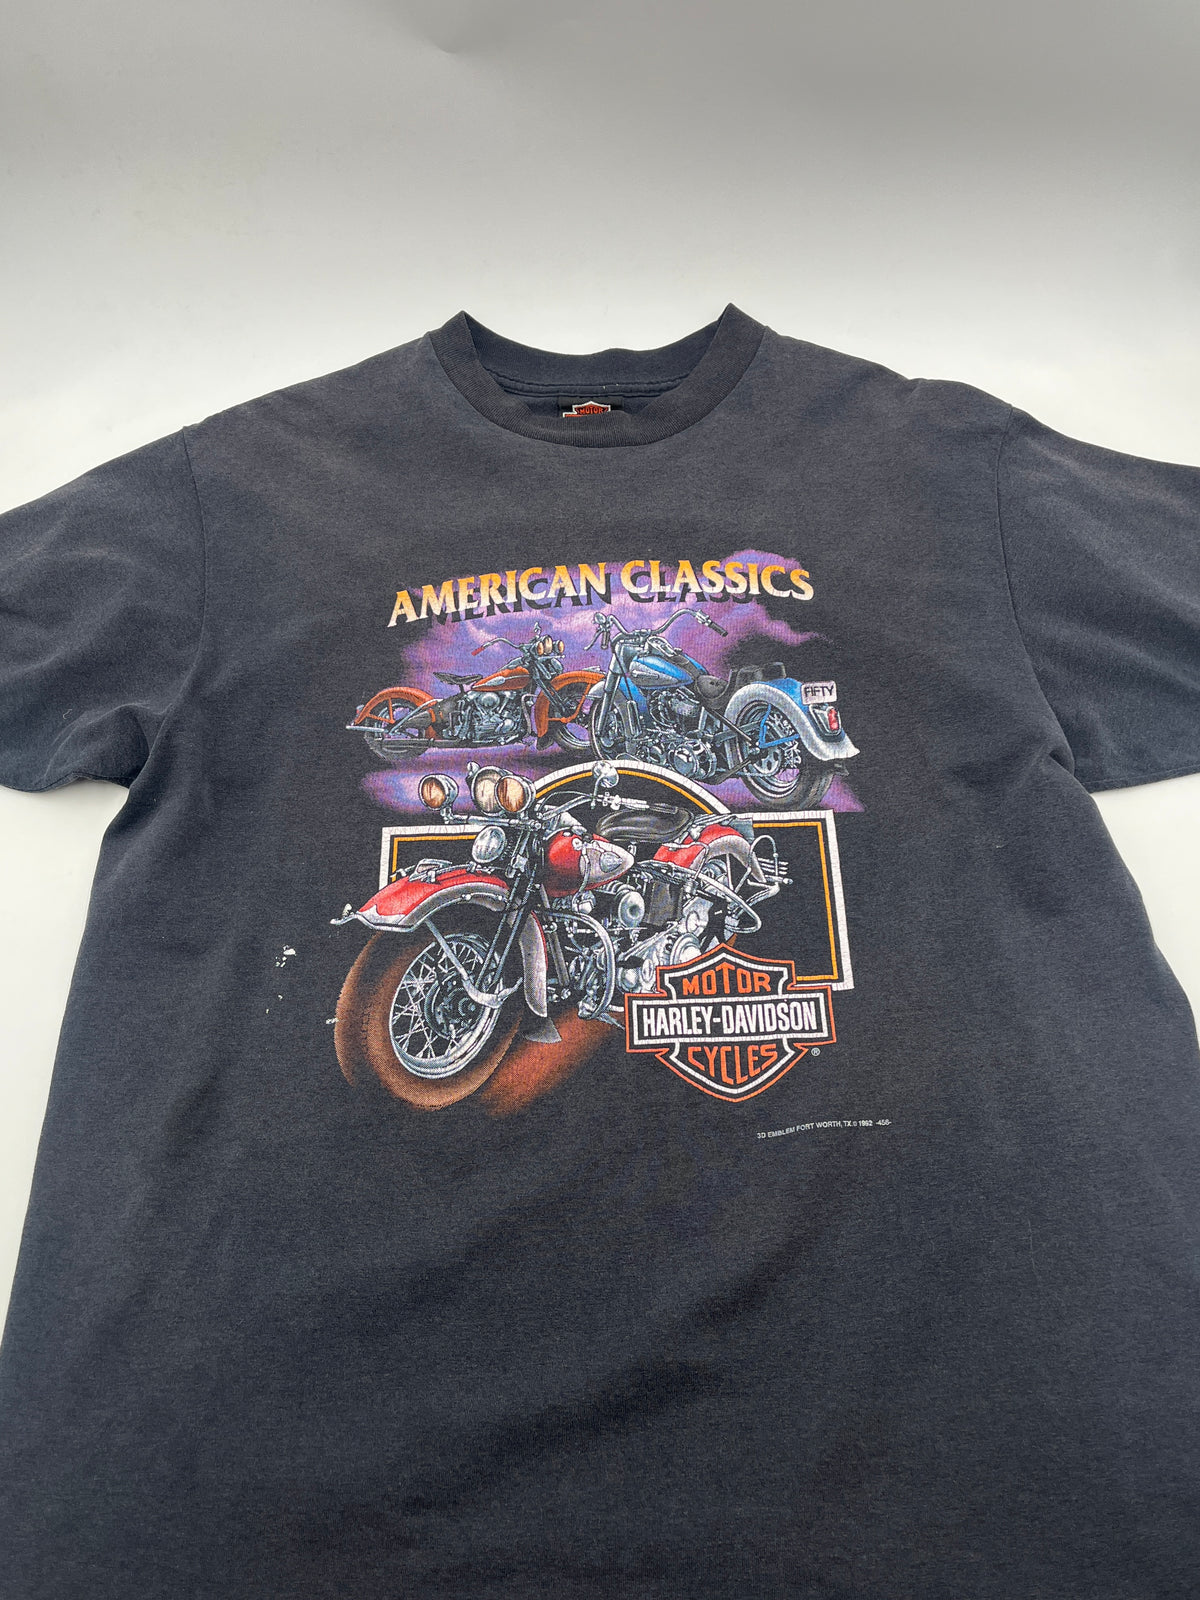 Vintage Harley Davidson American Classics Tee